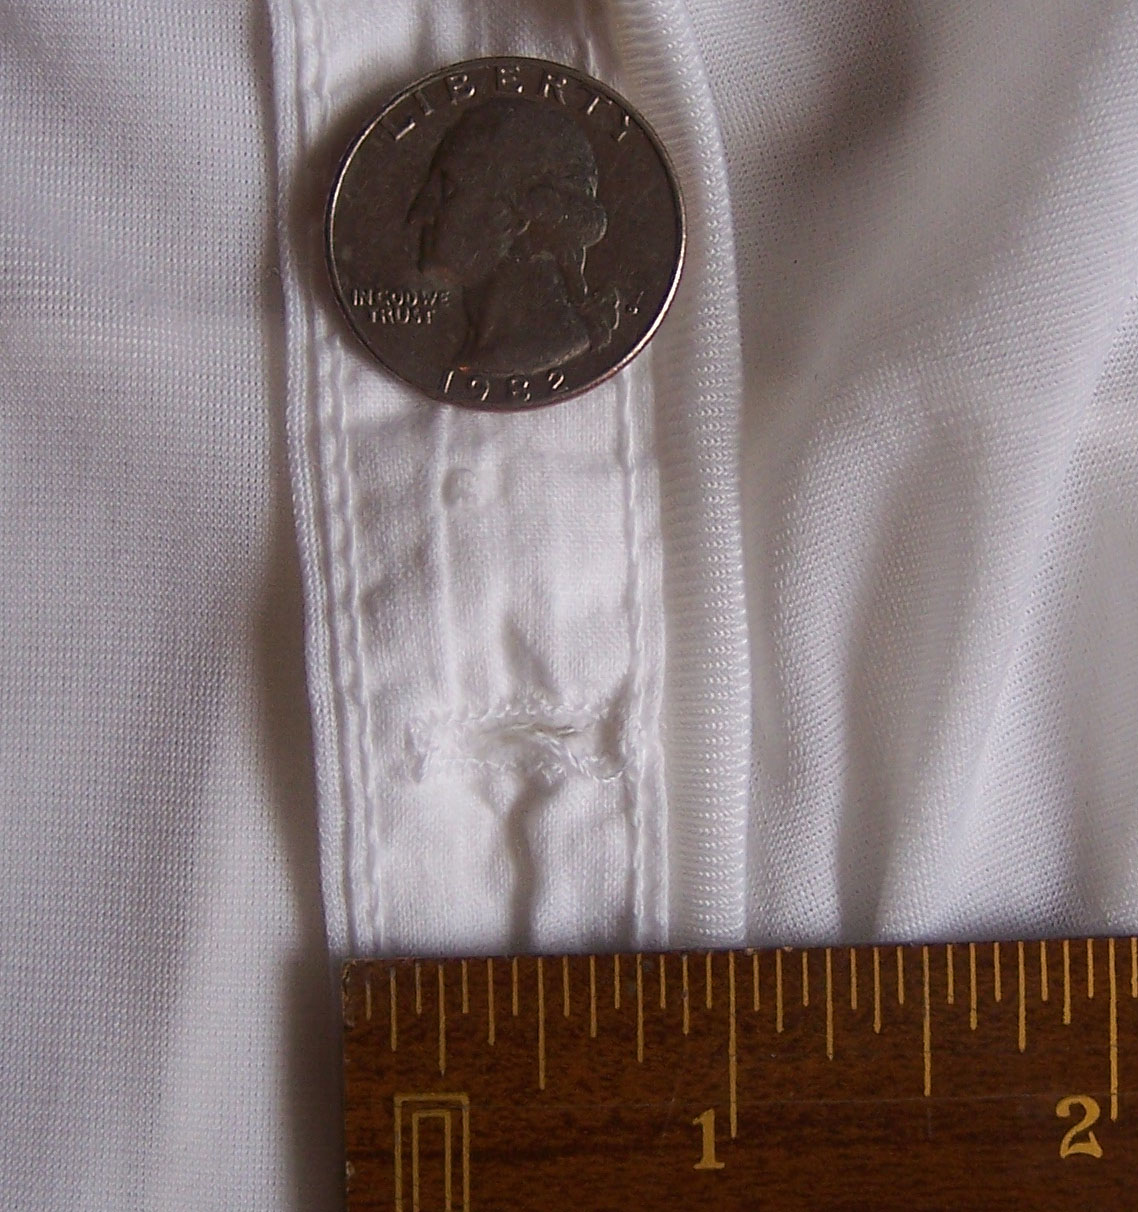 Mormon temple garment female navel marking inside stitching.